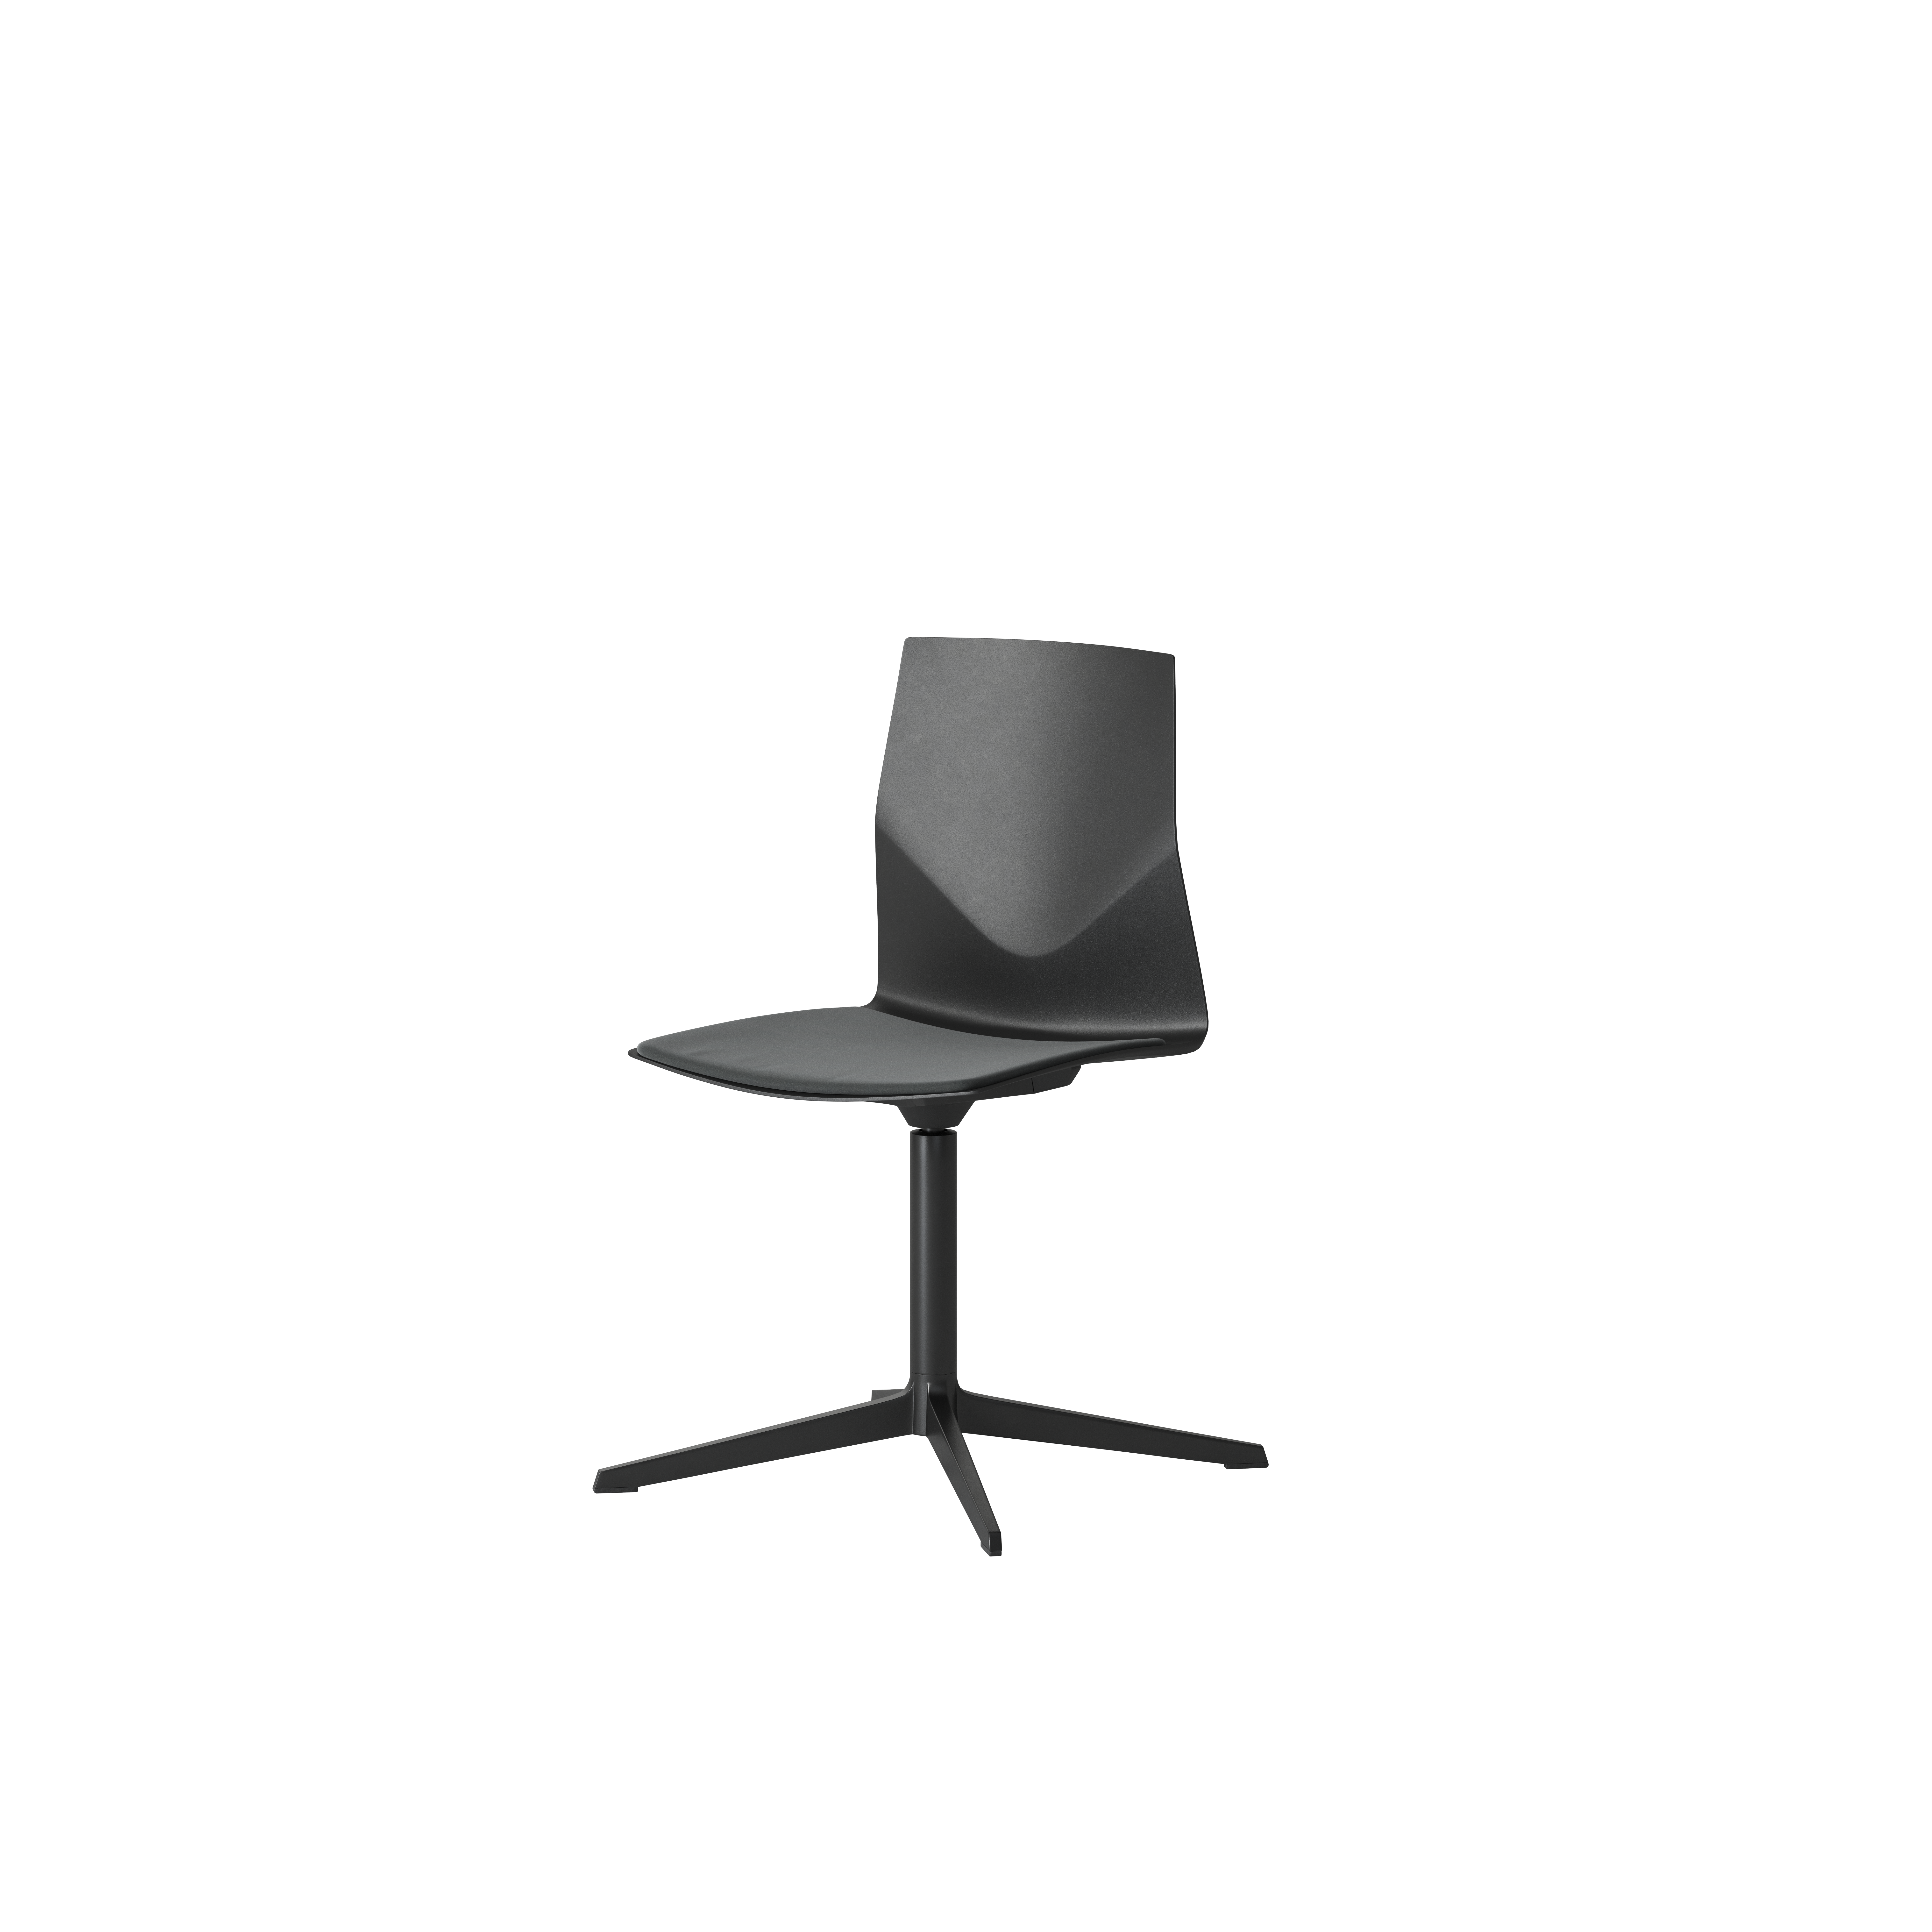 OCEE&FOUR – Chairs – FourCast 2 Evo – Plastic shell - Seat Pad - Aluminium Frame - Swivel Frame - Packshot Image 1